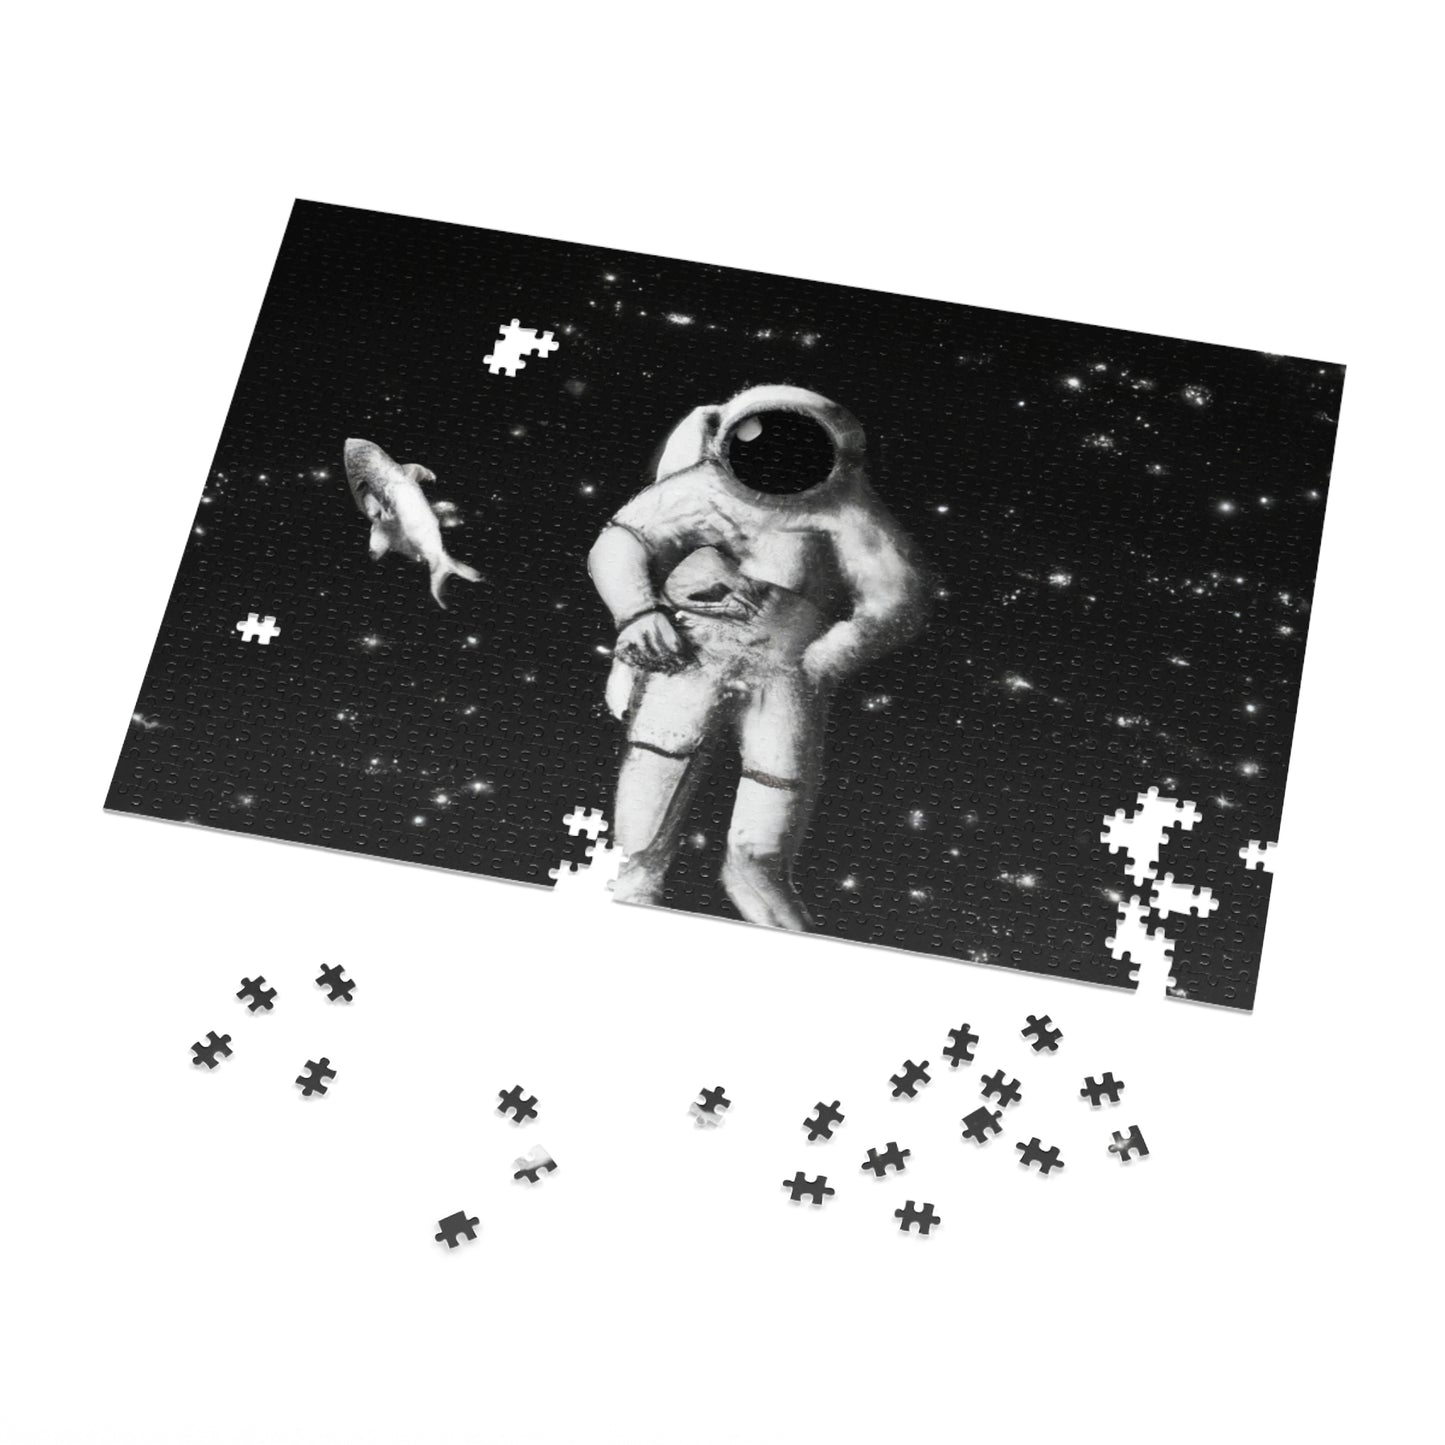 "A Celestial Sea Dance" - The Alien Jigsaw Puzzle